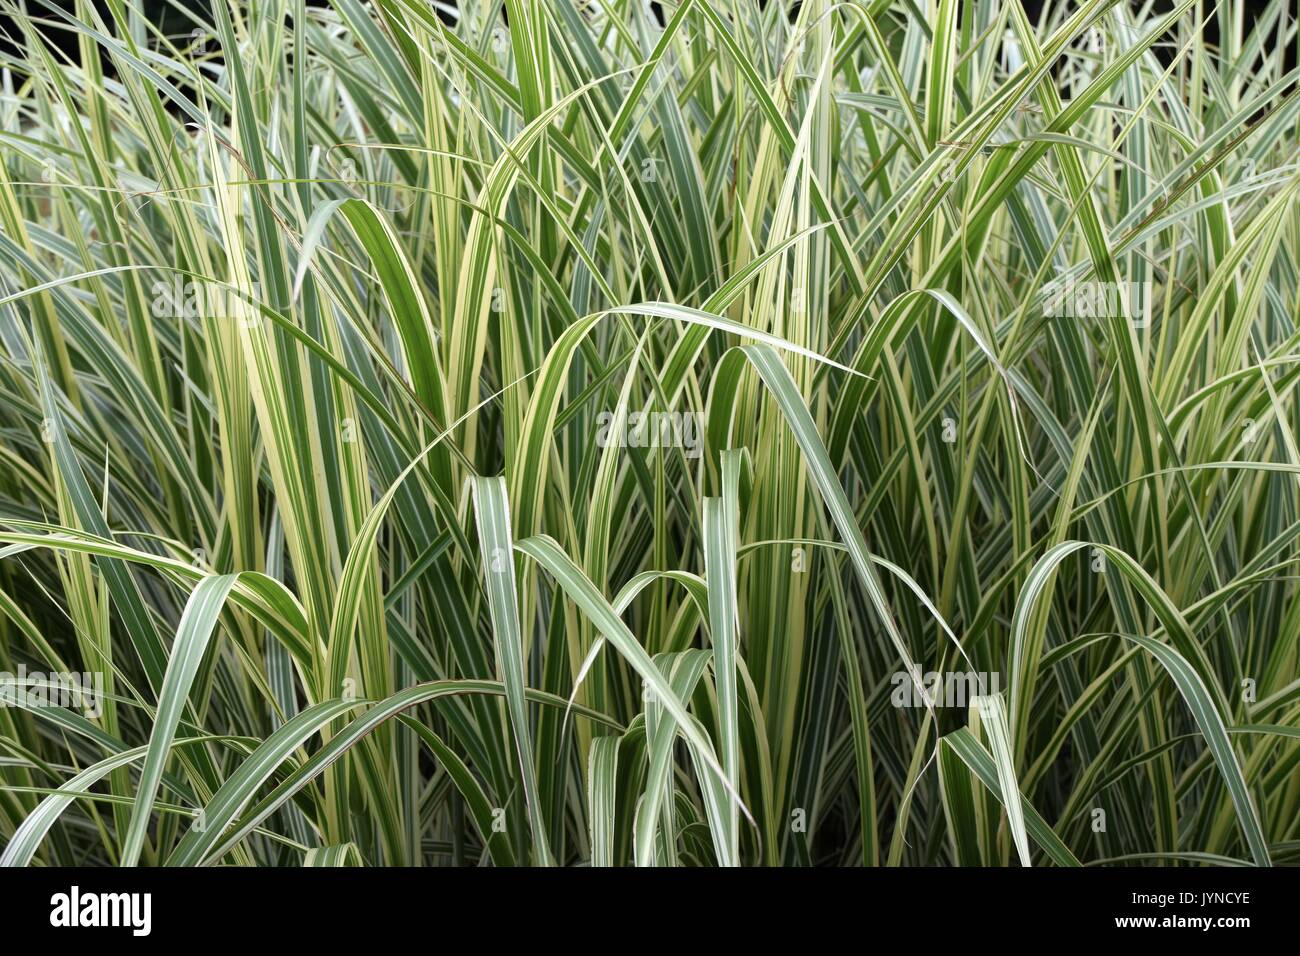 Ornamental grass, acorus calamus, Variegatus or sweet flag reed grass, carax, grassy plants, Cyperaceae, Sedges, Seg Stock Photo